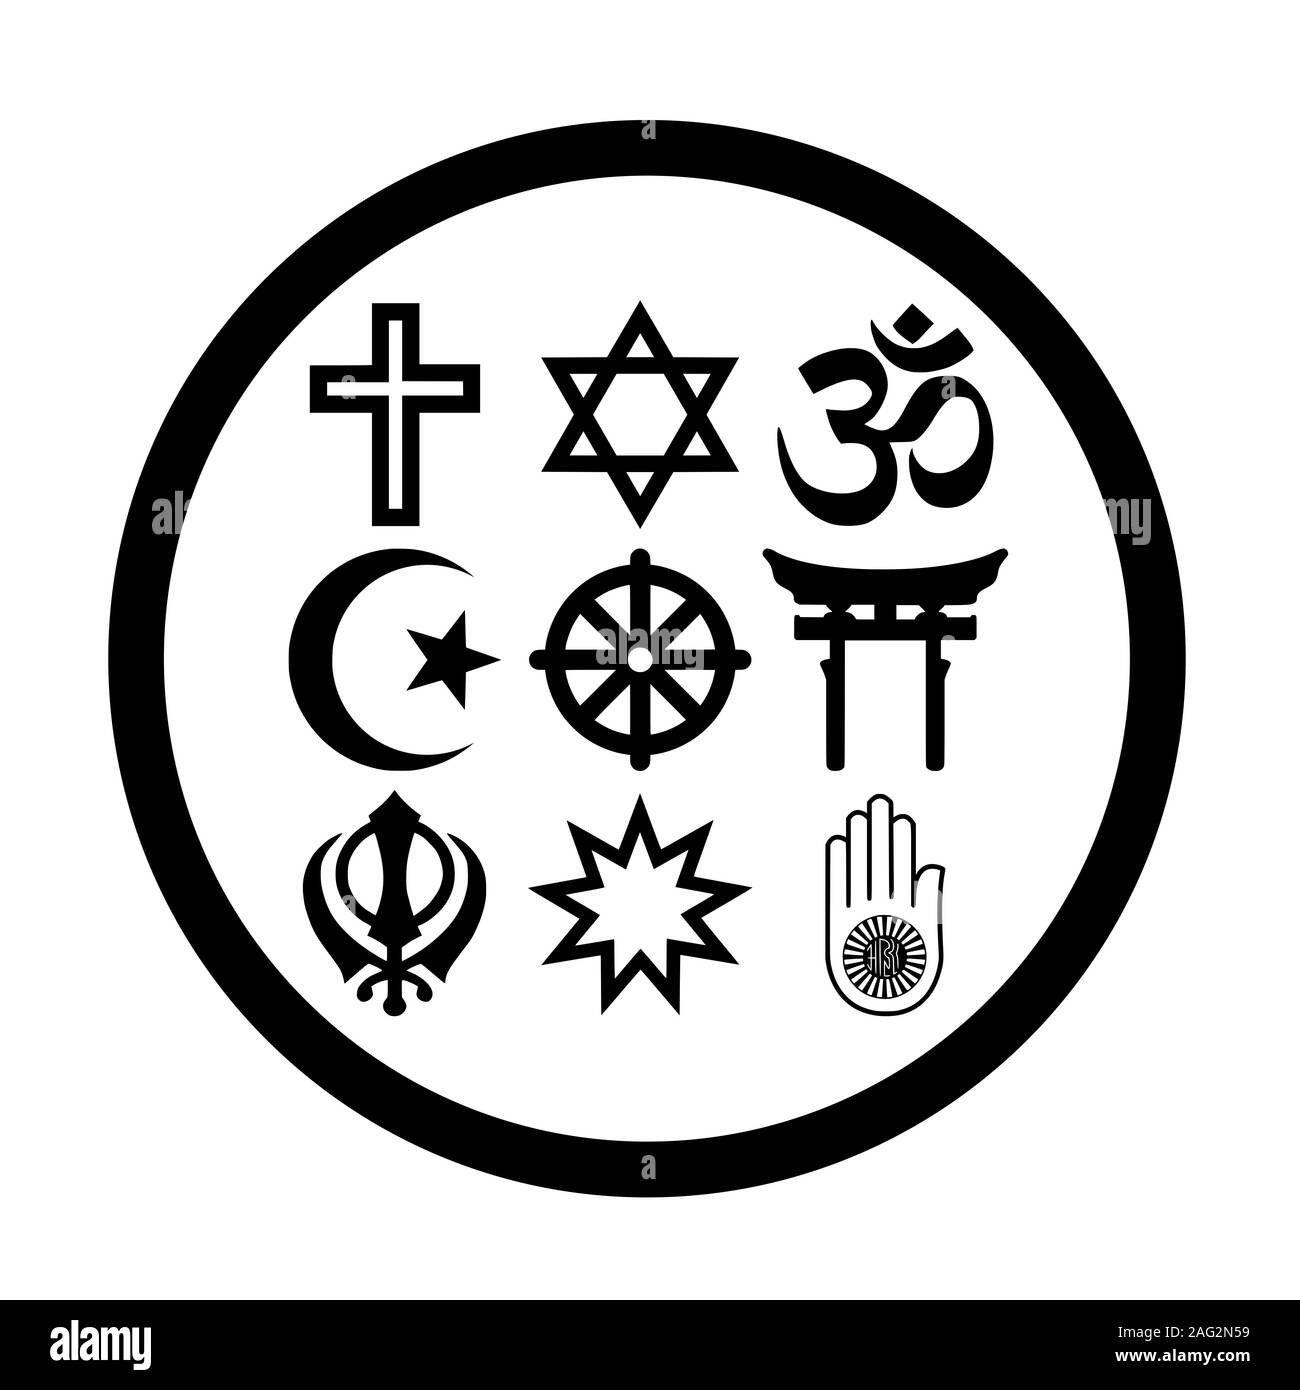 Religious symbols in a circle Stock Photo